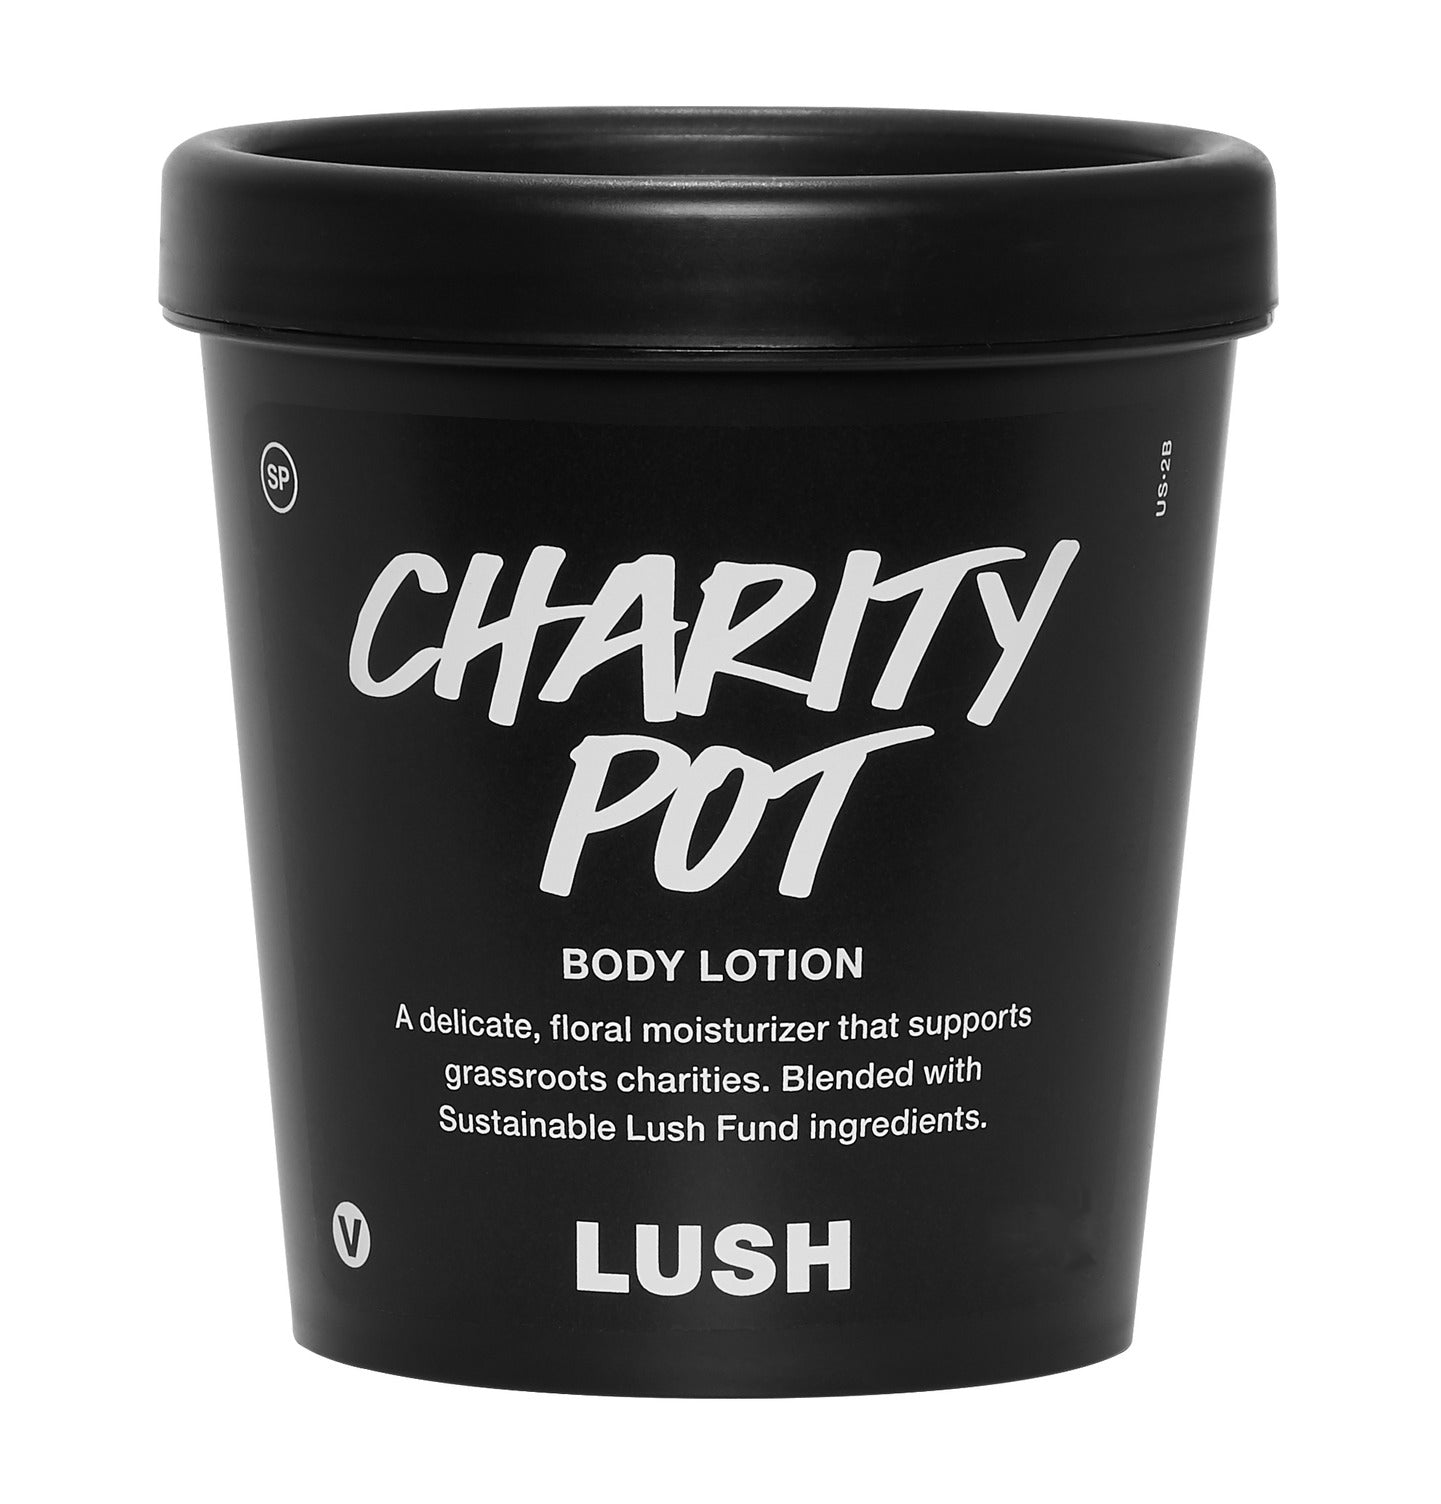 Charity Pot